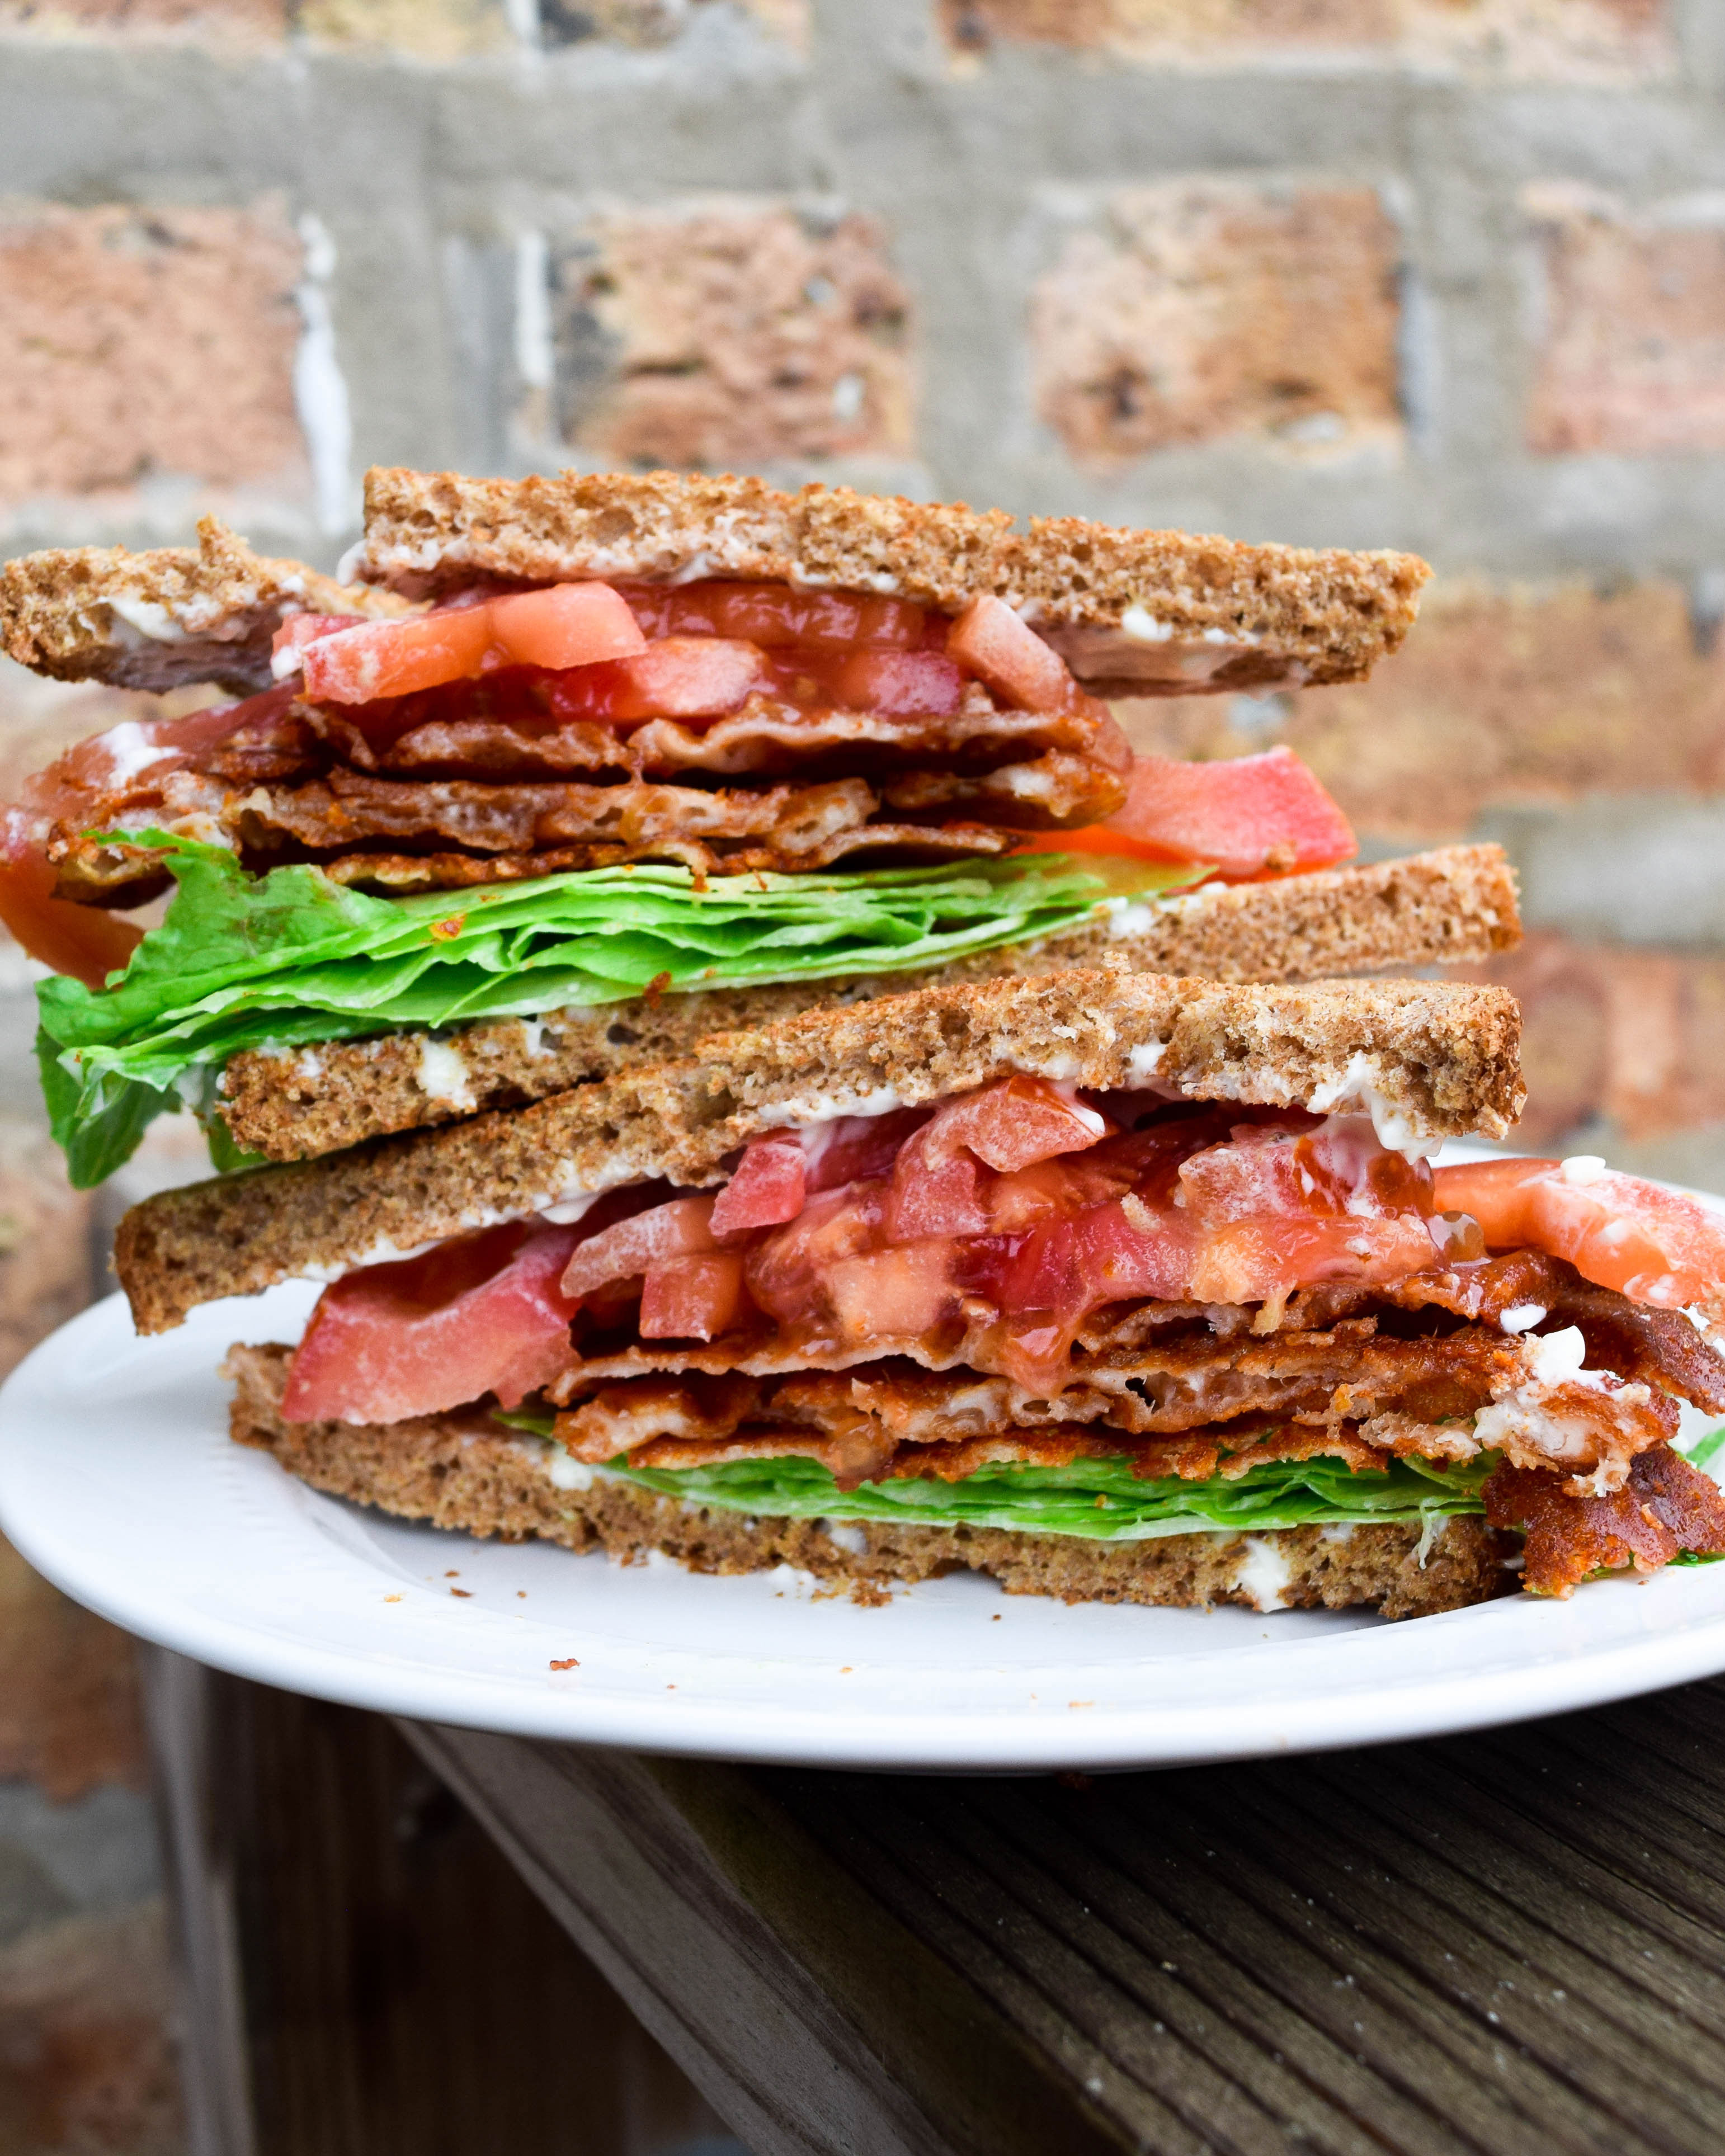 Provolone “BLT” Sandwich